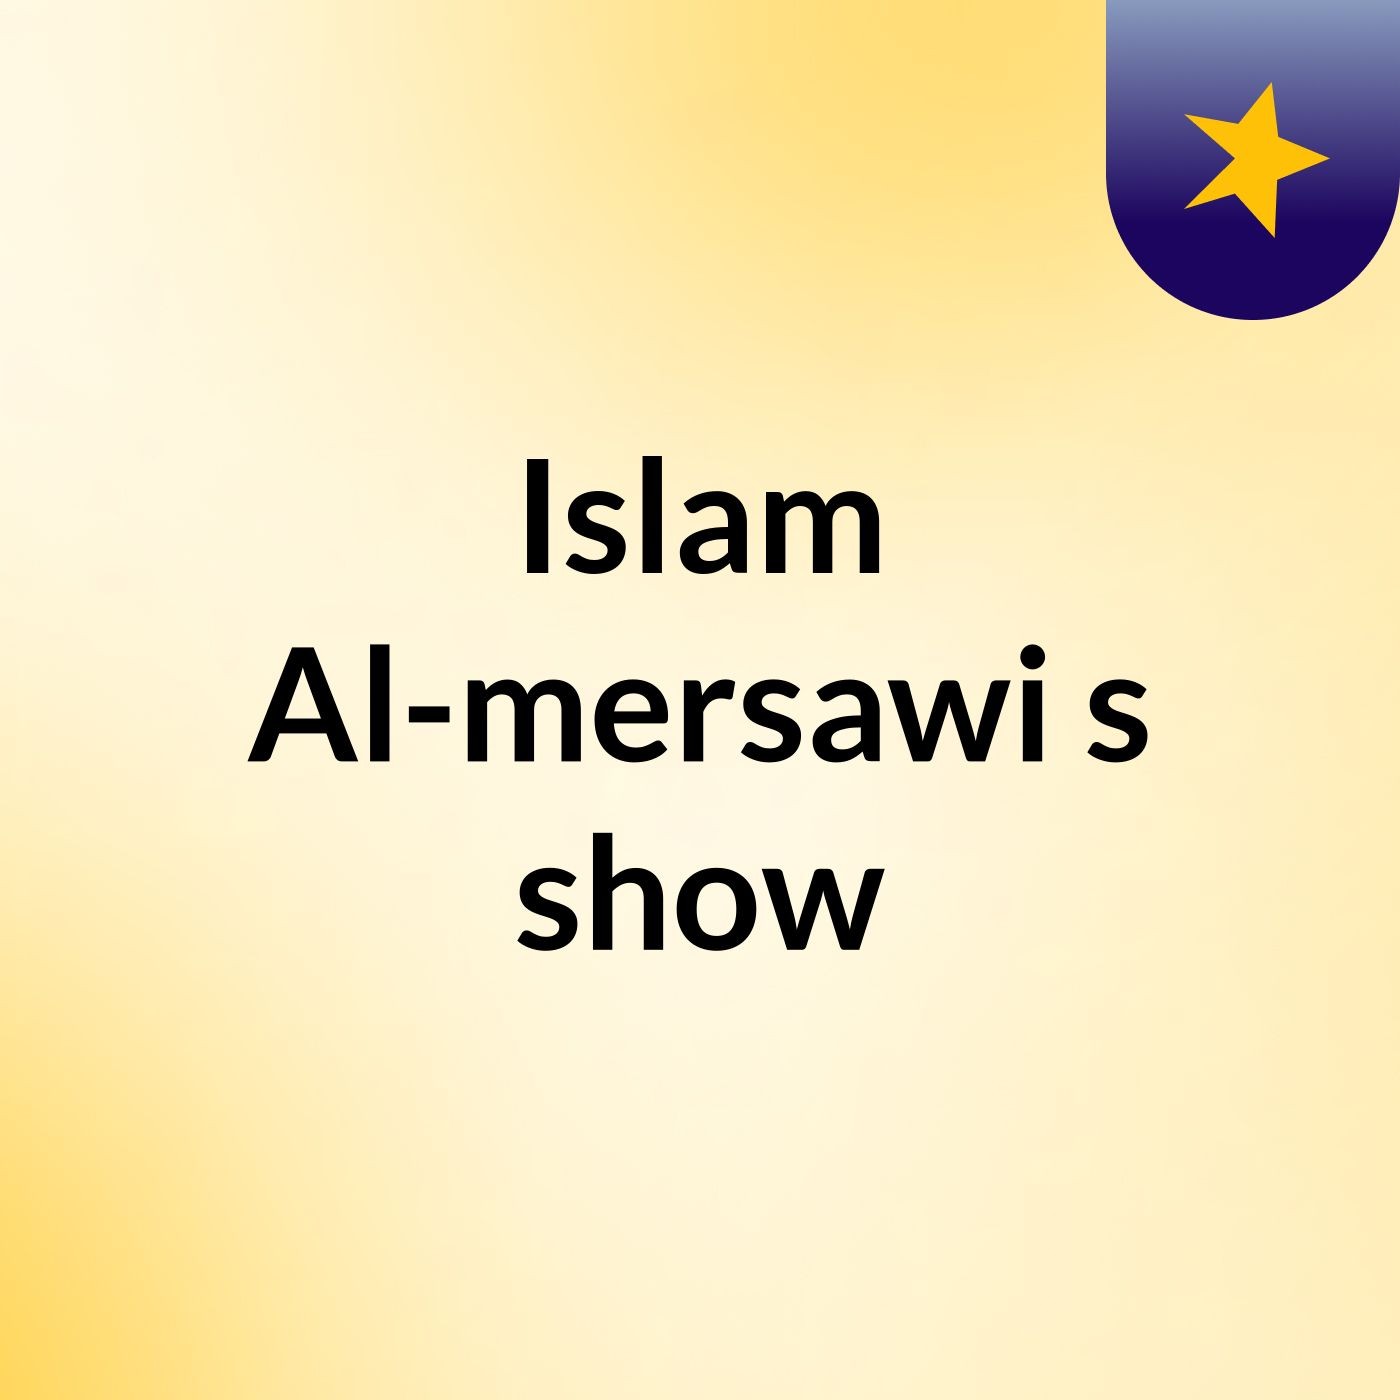 Islam Al-mersawi's show